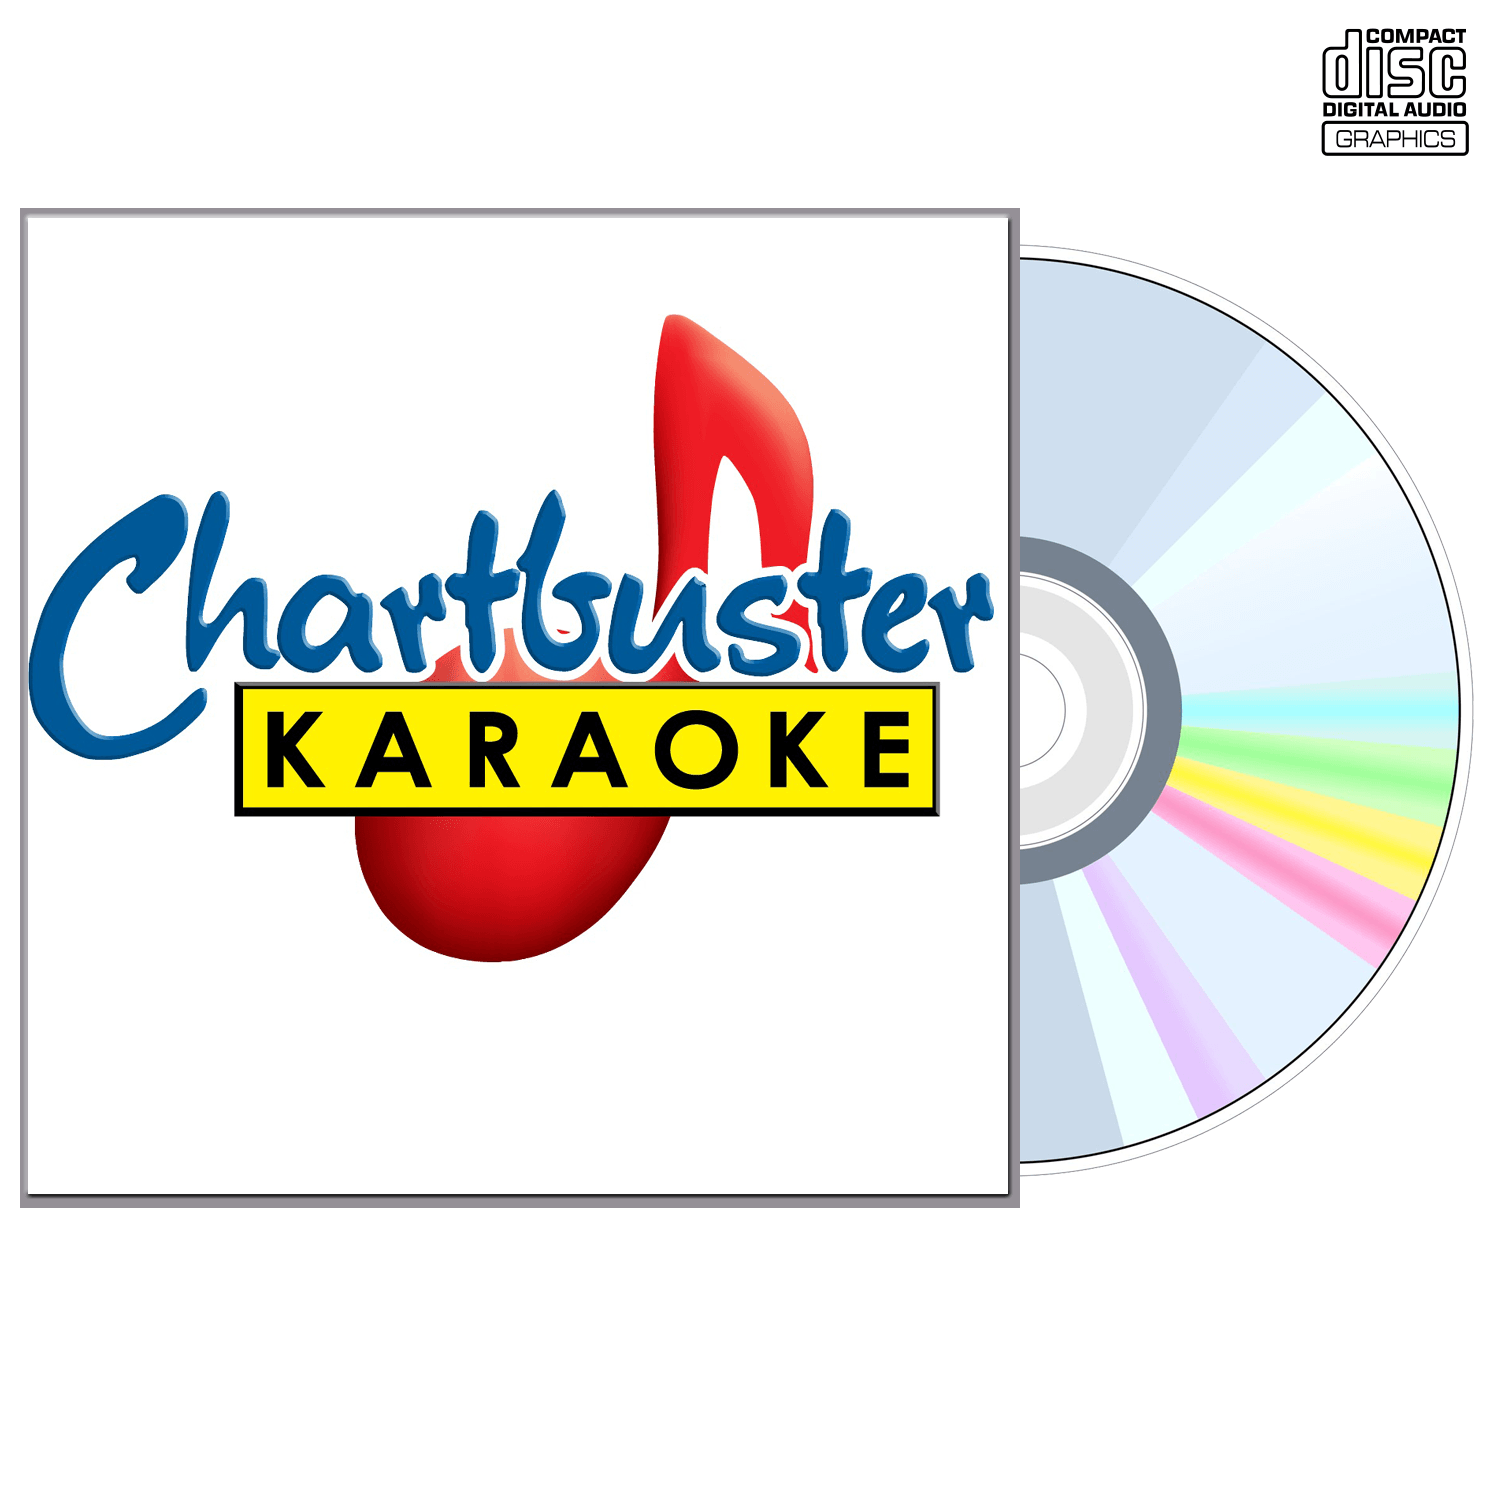 Country Men Vol 02 - CD+G - Chartbuster Karaoke - Karaoke Home Entertainment